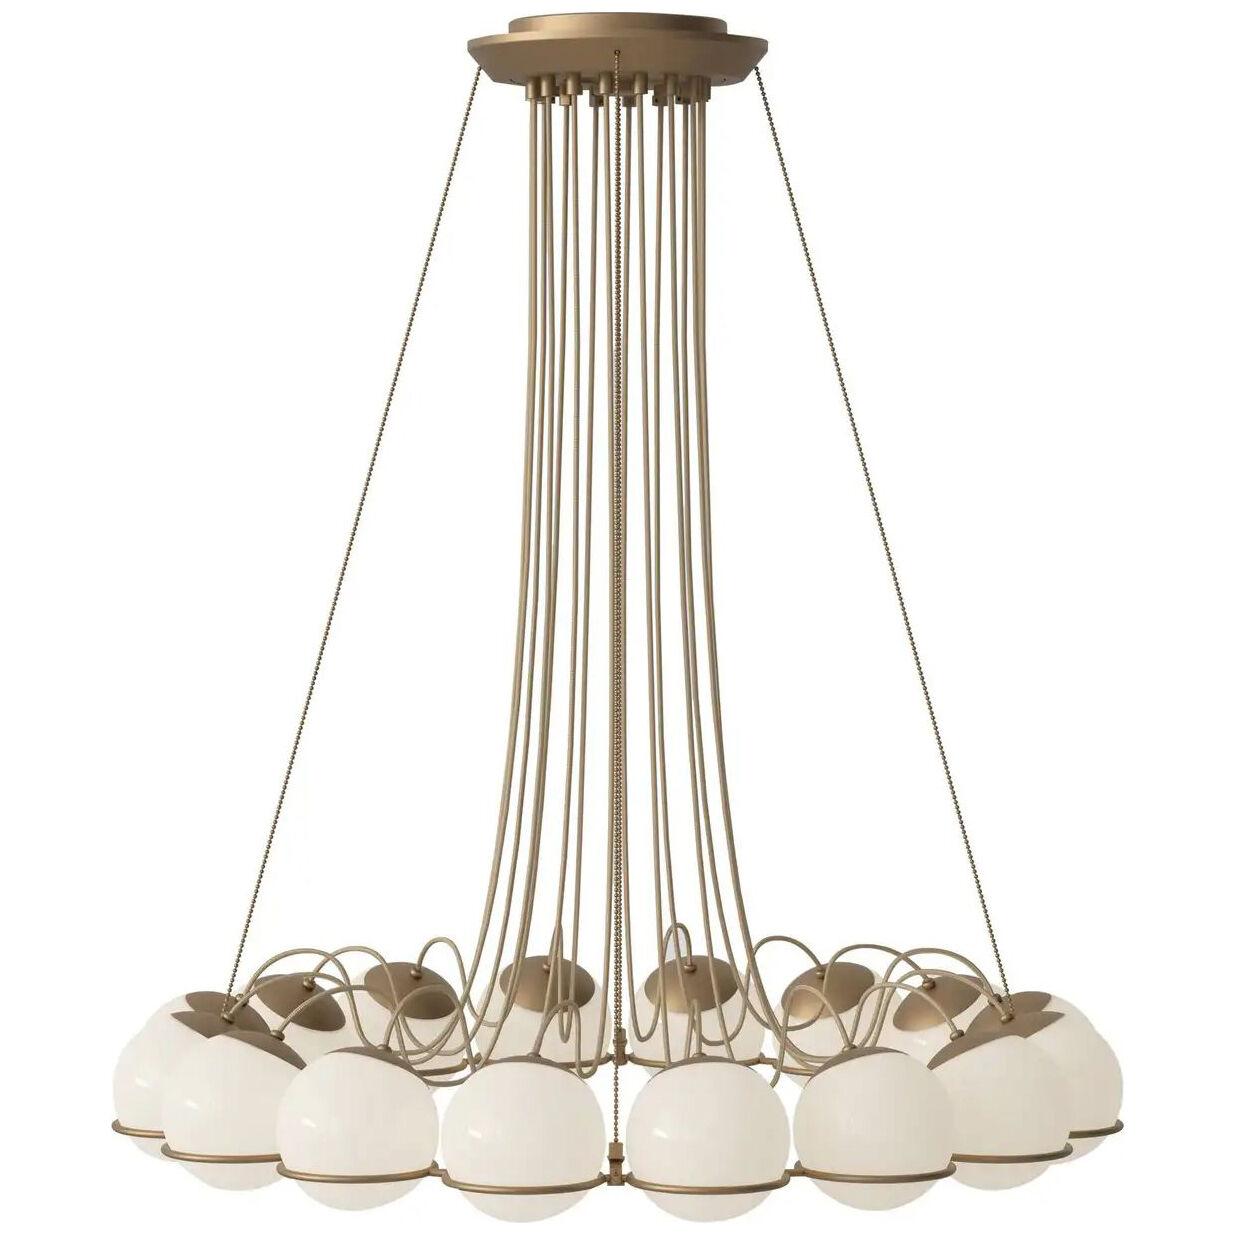 Gino Sarfatti Lamp Model 2109/16/14 Champagne Structure by Astep